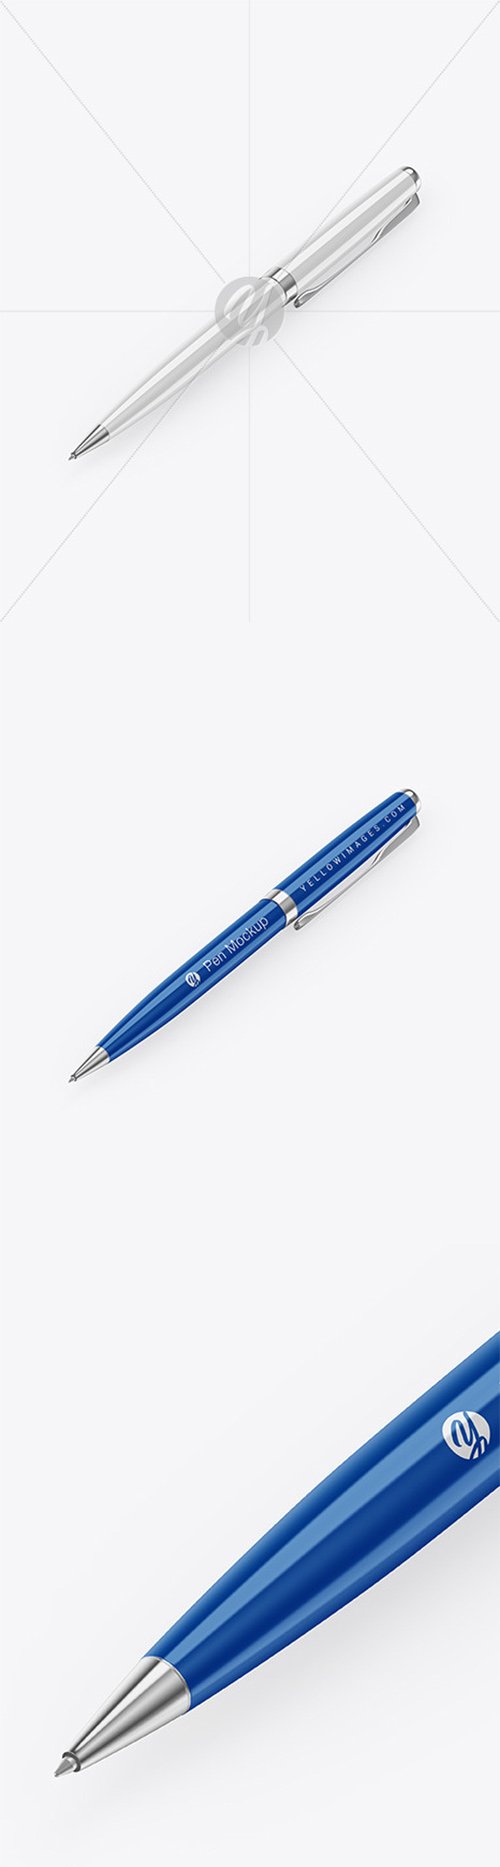 Glossy Pen w/ Metallic Finish Mockup 65958 TIF